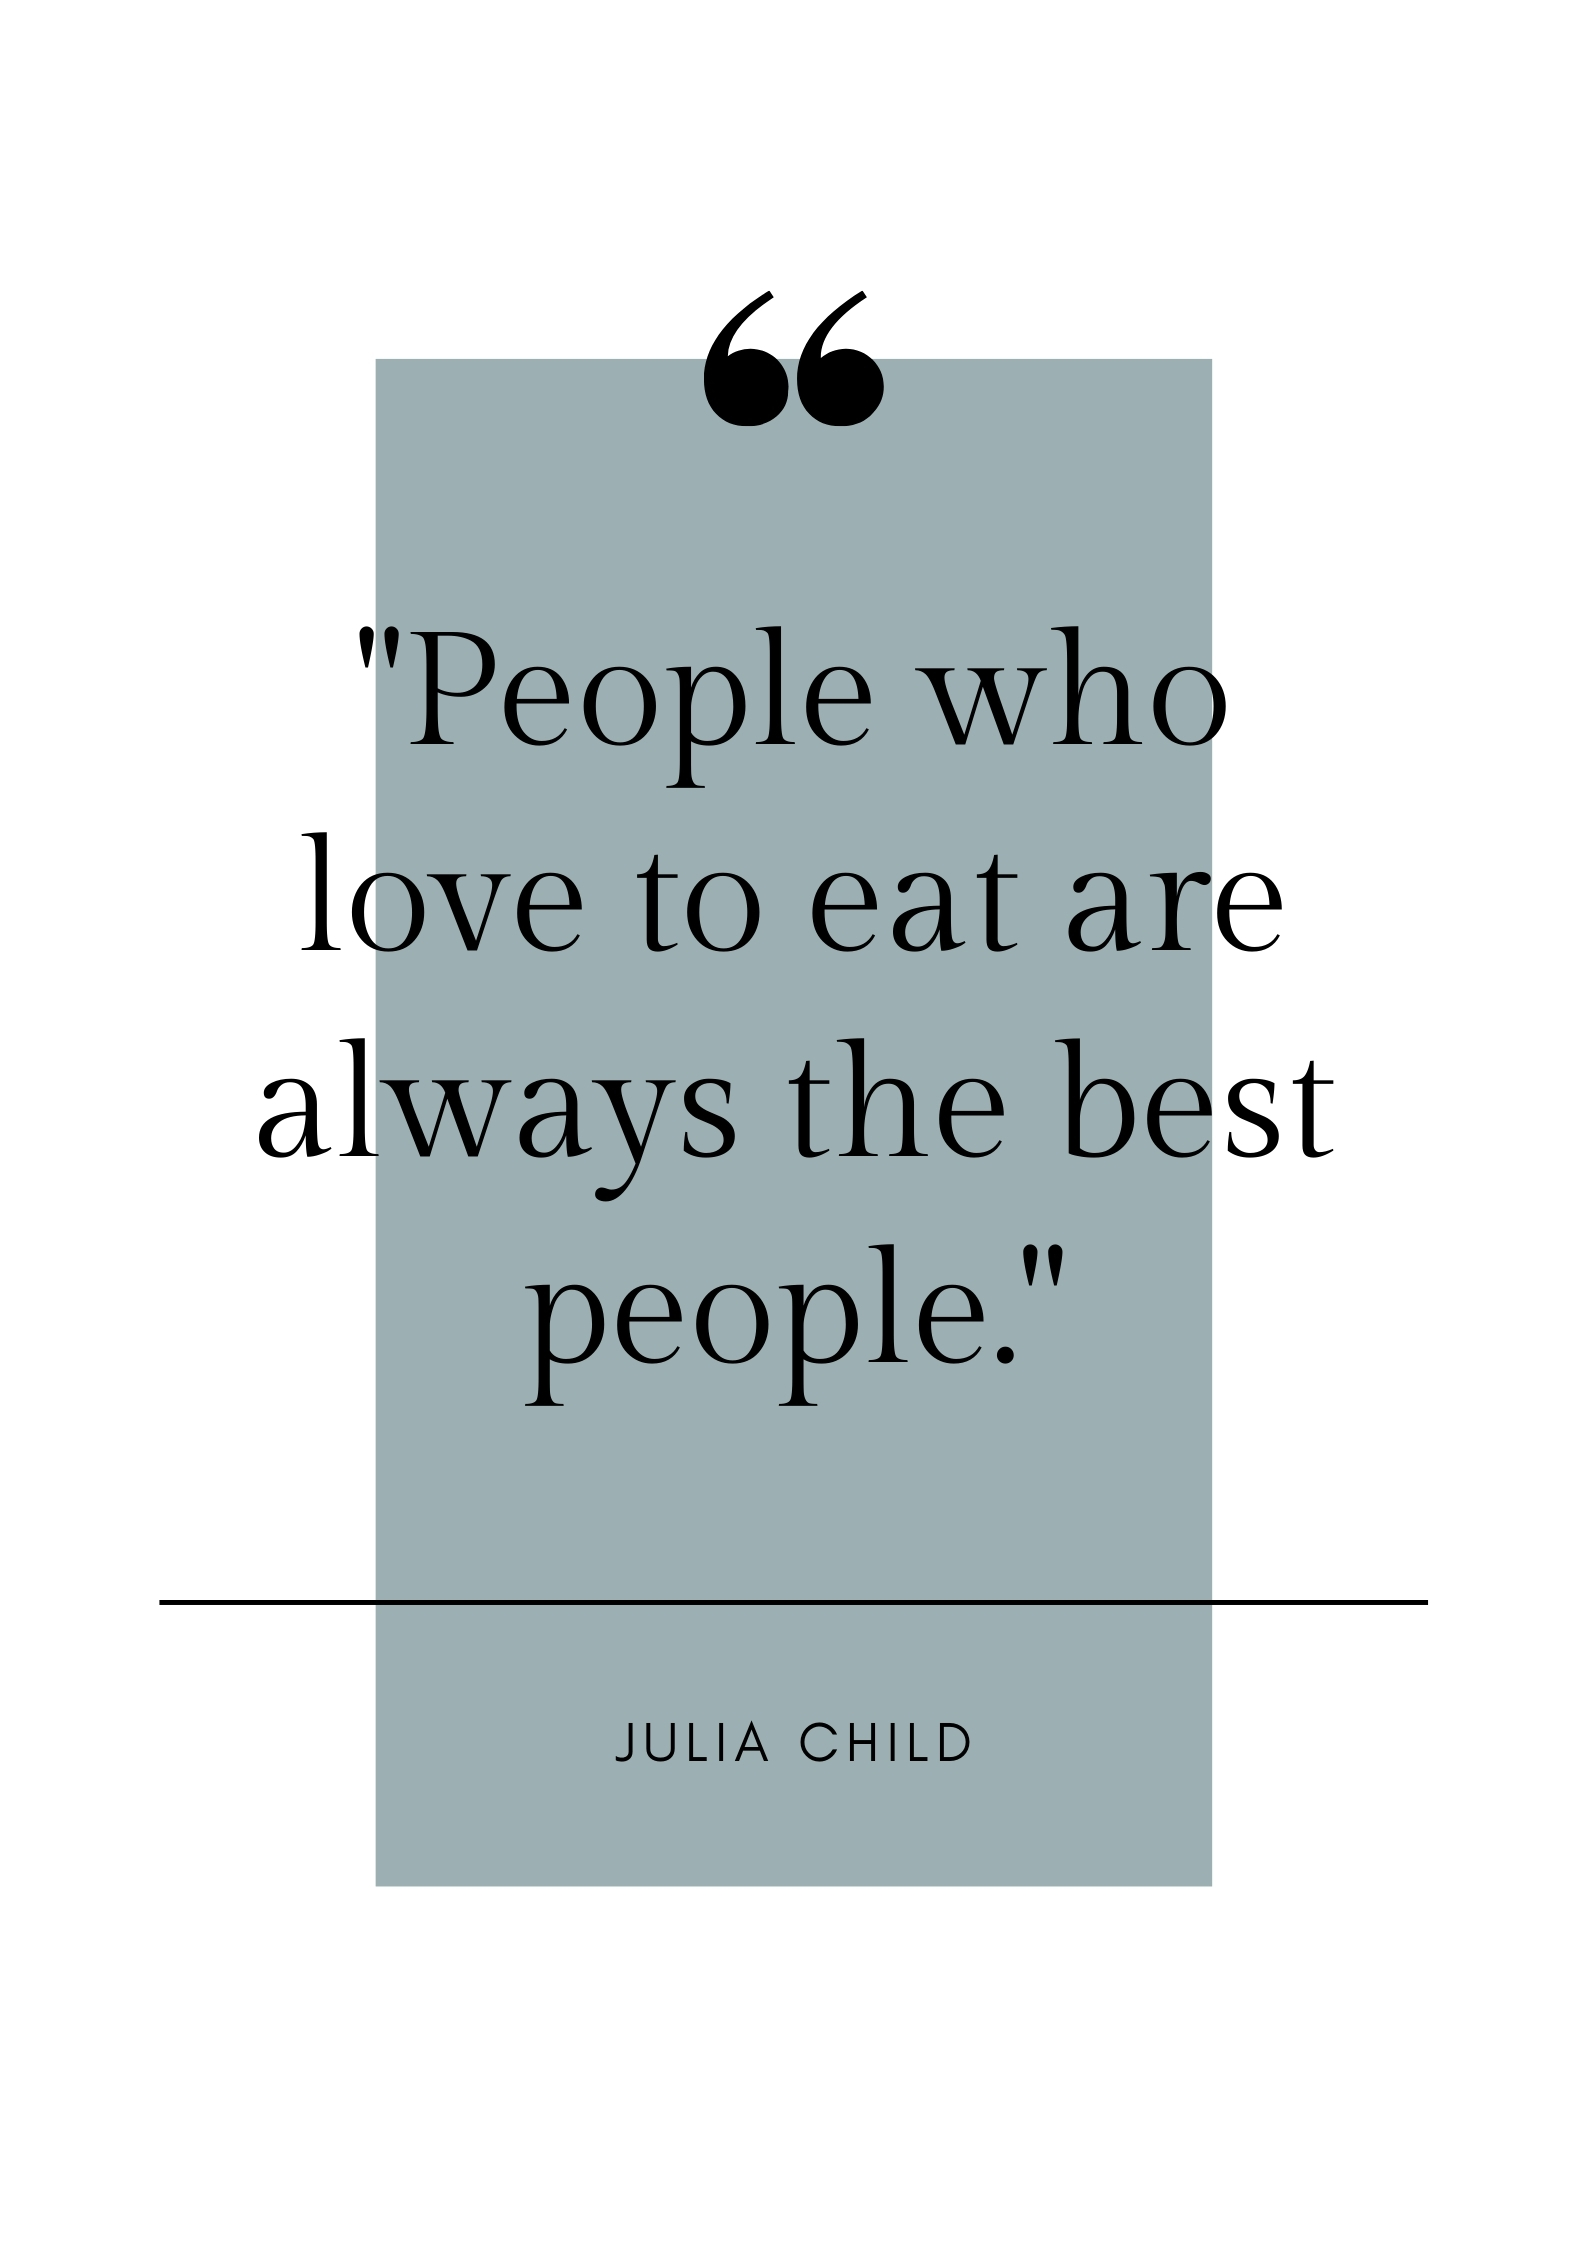 julia child quote